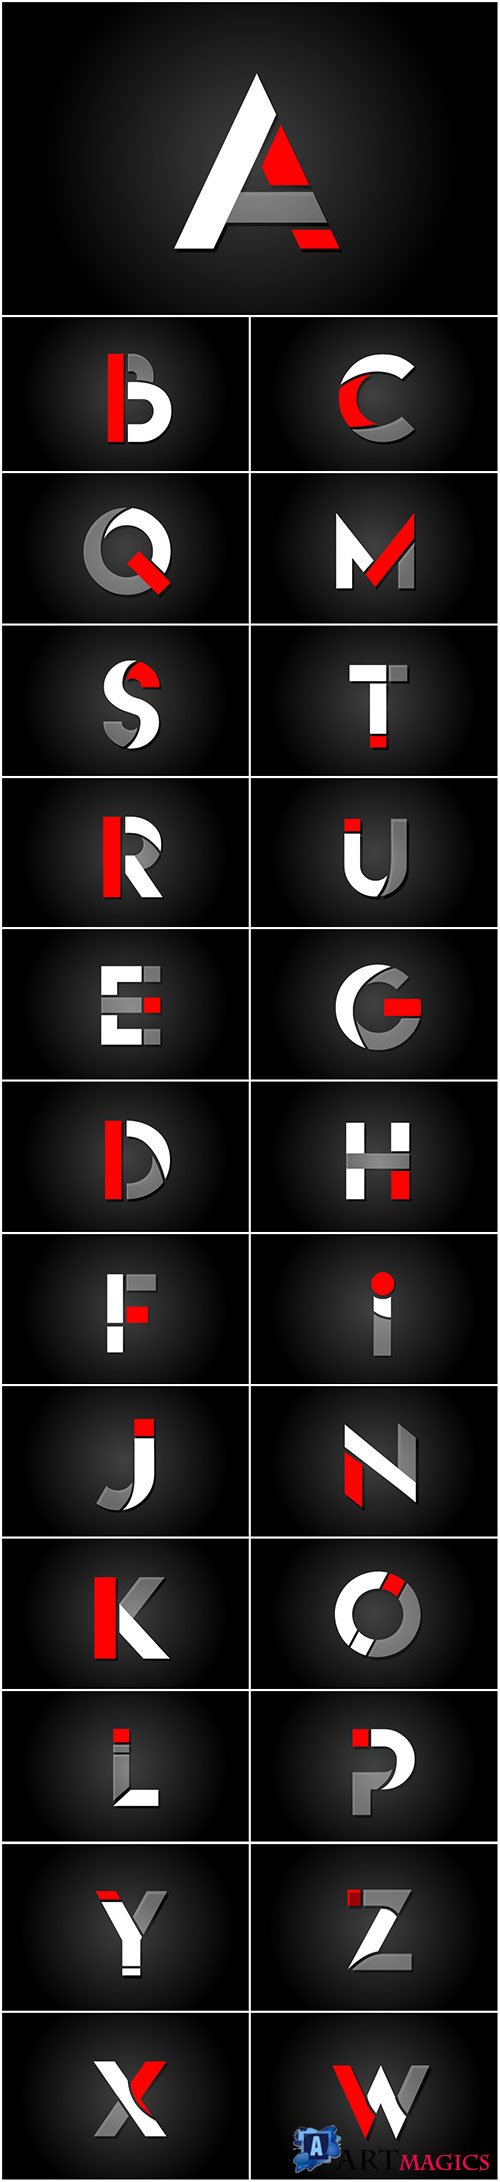 Red white black alphabet letter logo for company icon design